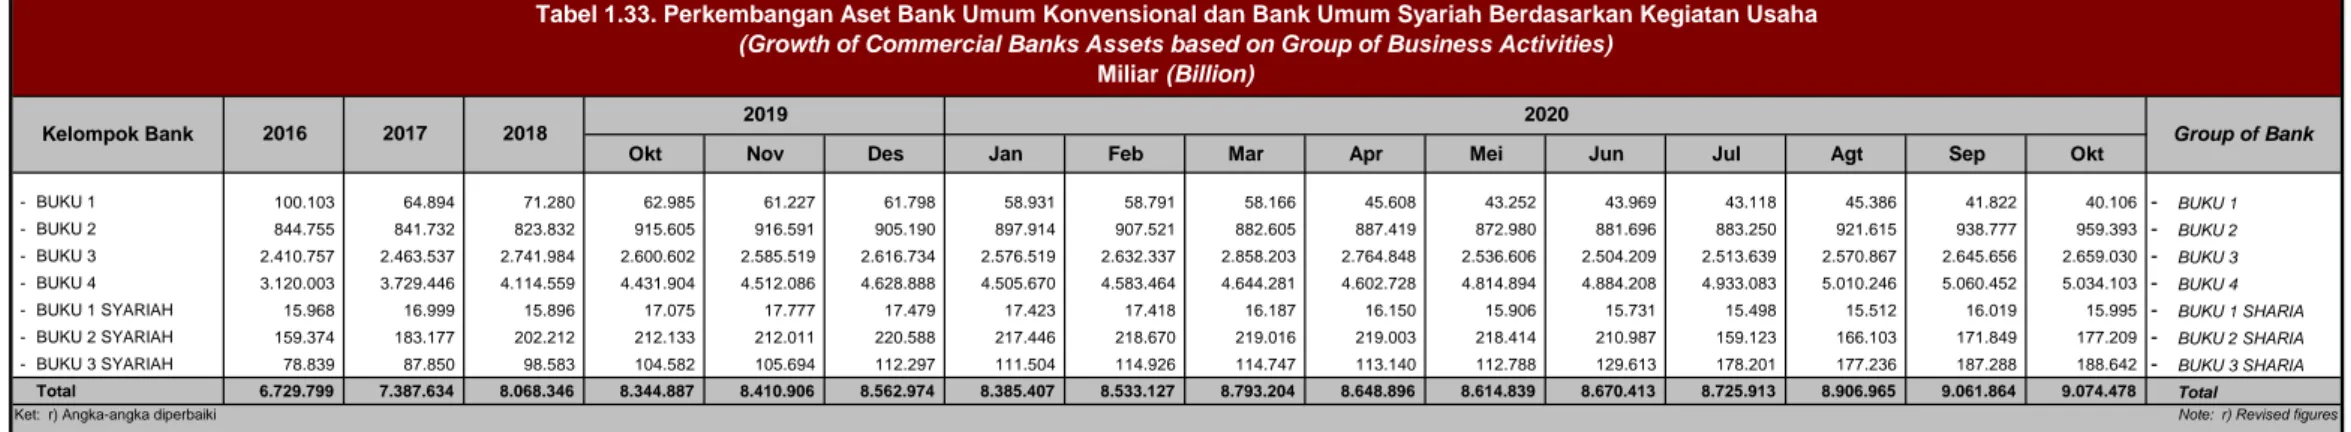 Tabel 1.33. Perkembangan Aset Bank Umum Konvensional dan Bank Umum Syariah Berdasarkan Kegiatan Usaha (Growth of Commercial Banks Assets based on Group of Business Activities)